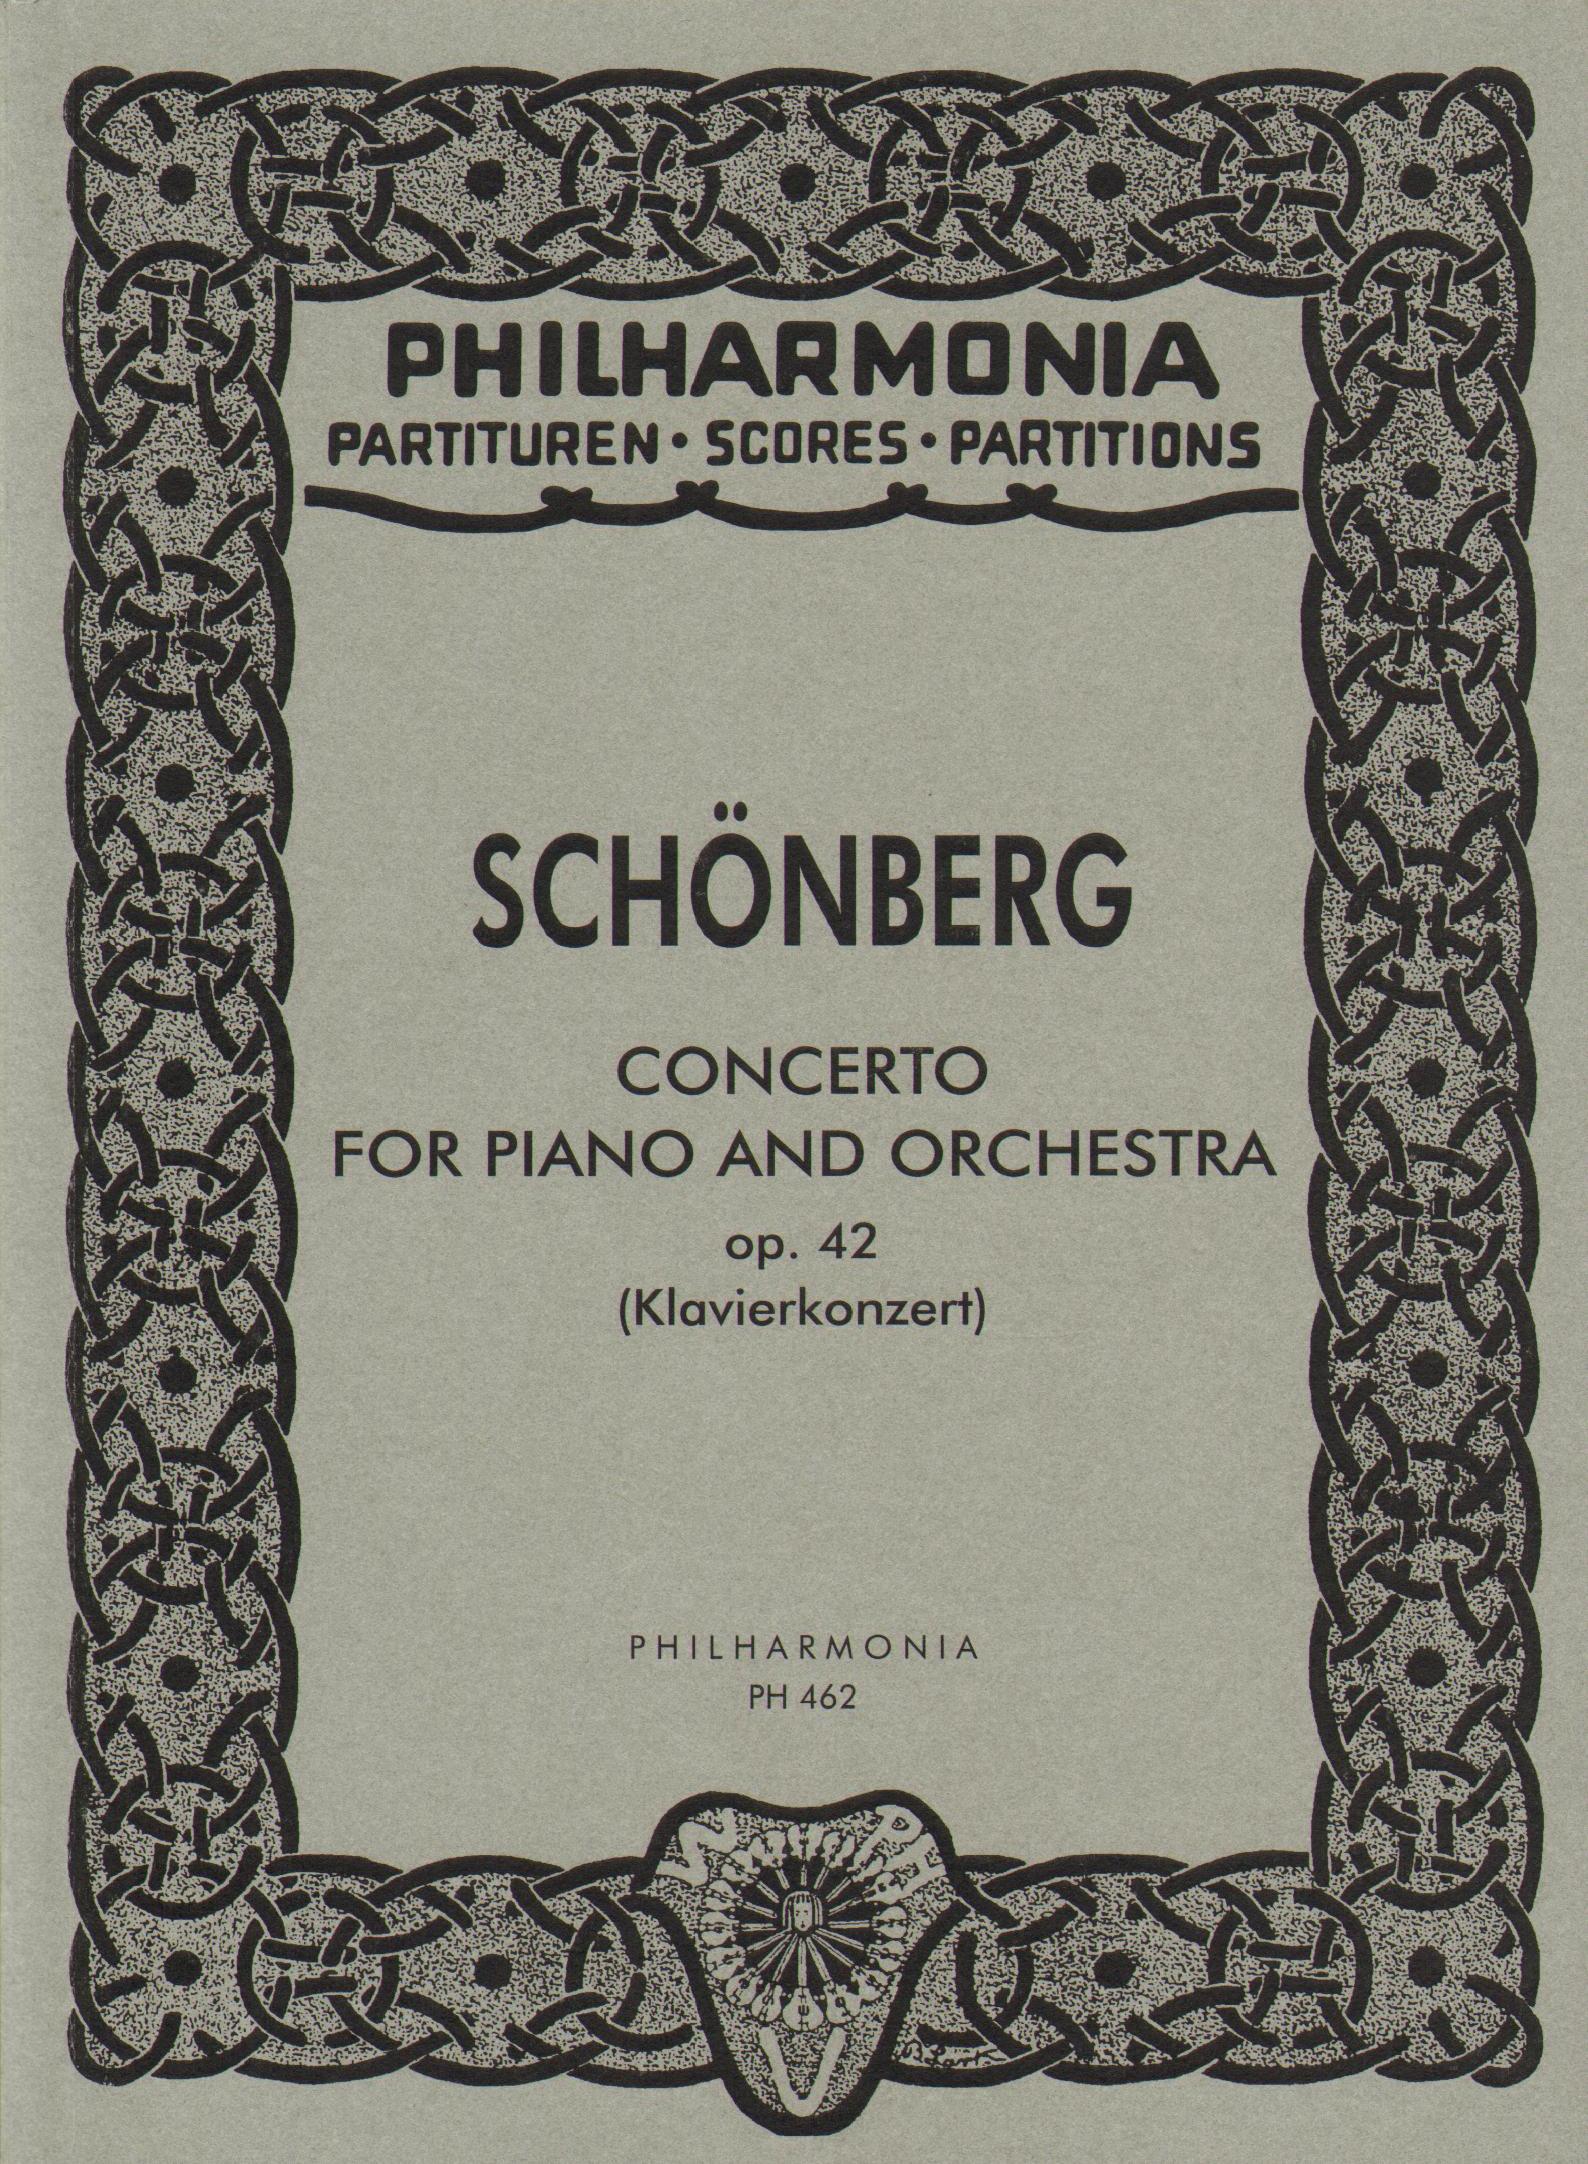 Schoenberg Piano Concerto Op42 Pocket Score Sheet Music Songbook